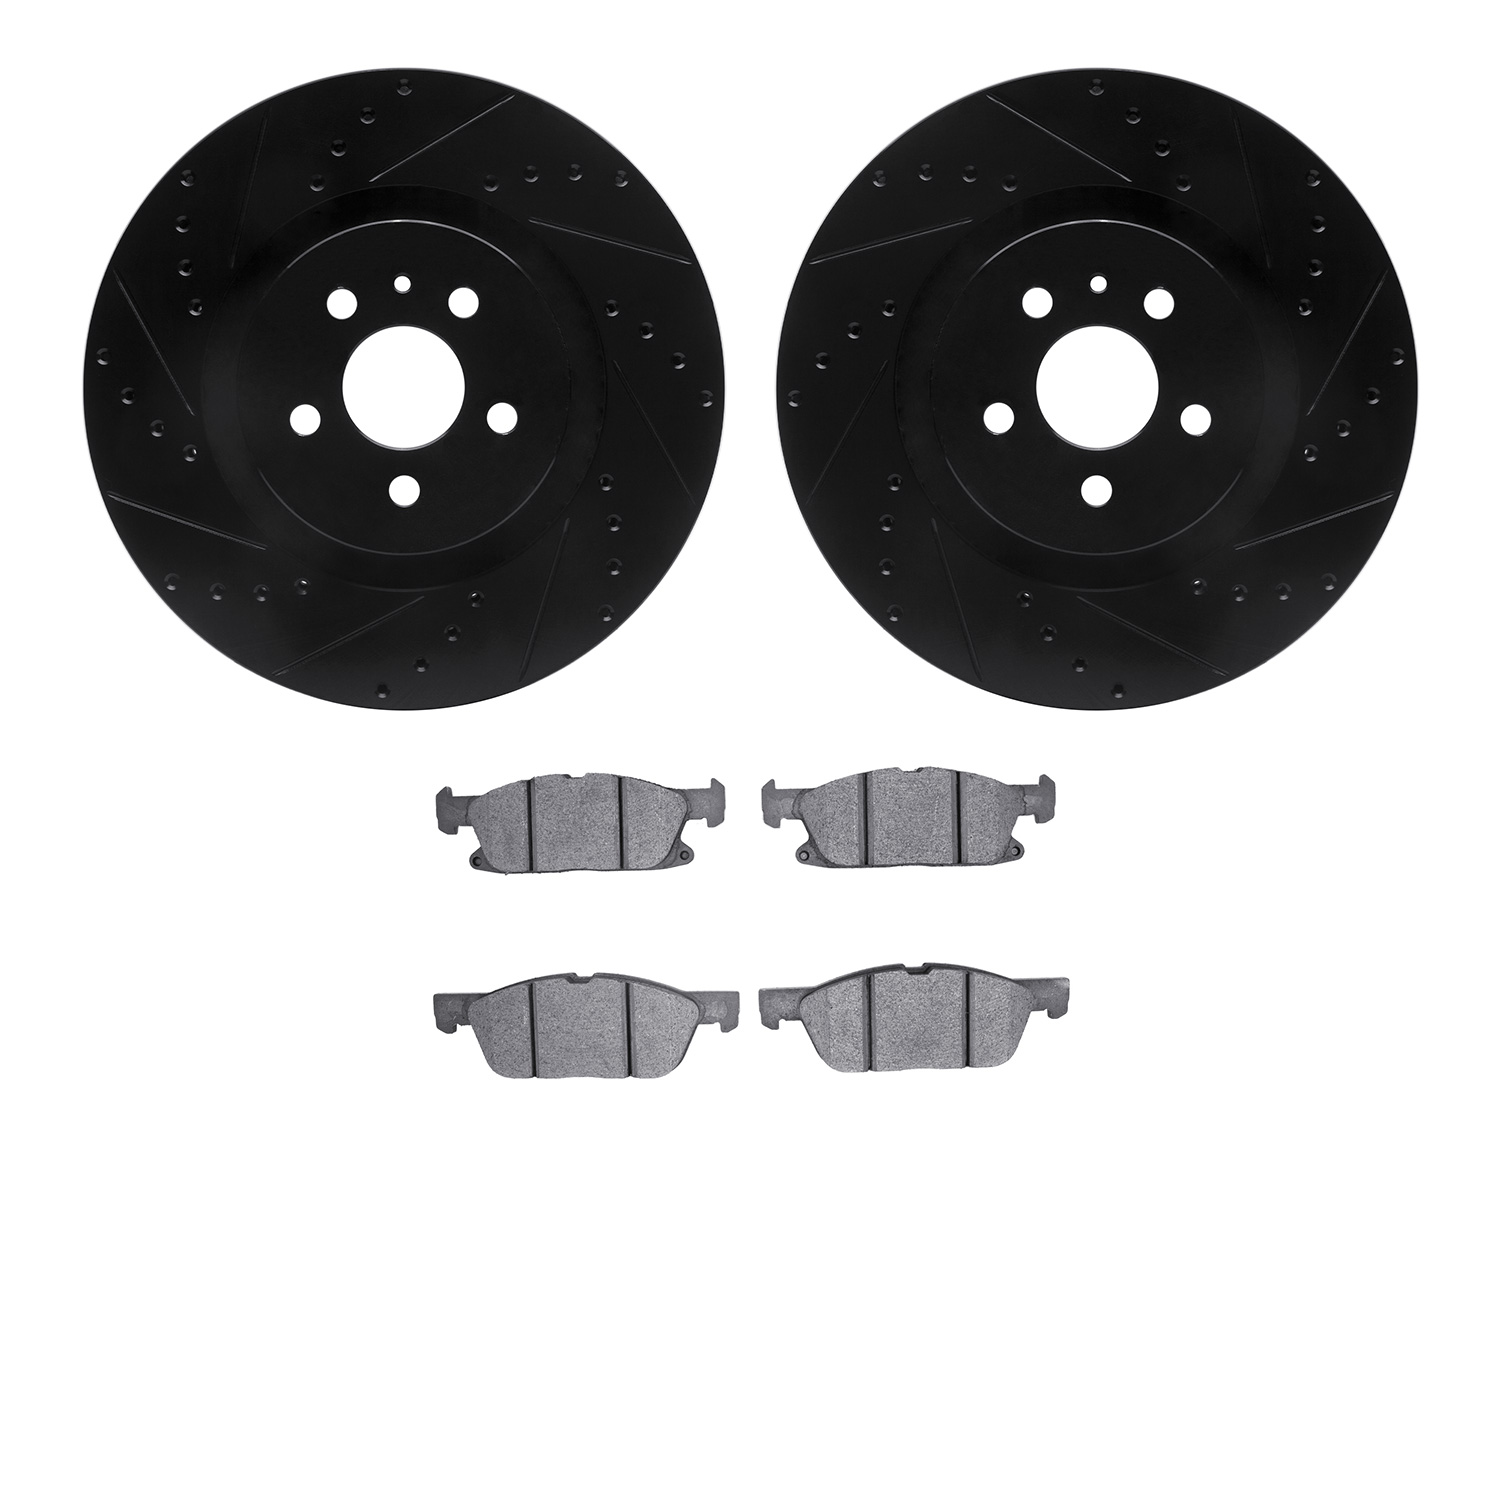 8302-55010 Drilled/Slotted Brake Rotors with 3000-Series Ceramic Brake Pads Kit [Black], 2015-2020 Ford/Lincoln/Mercury/Mazda, P